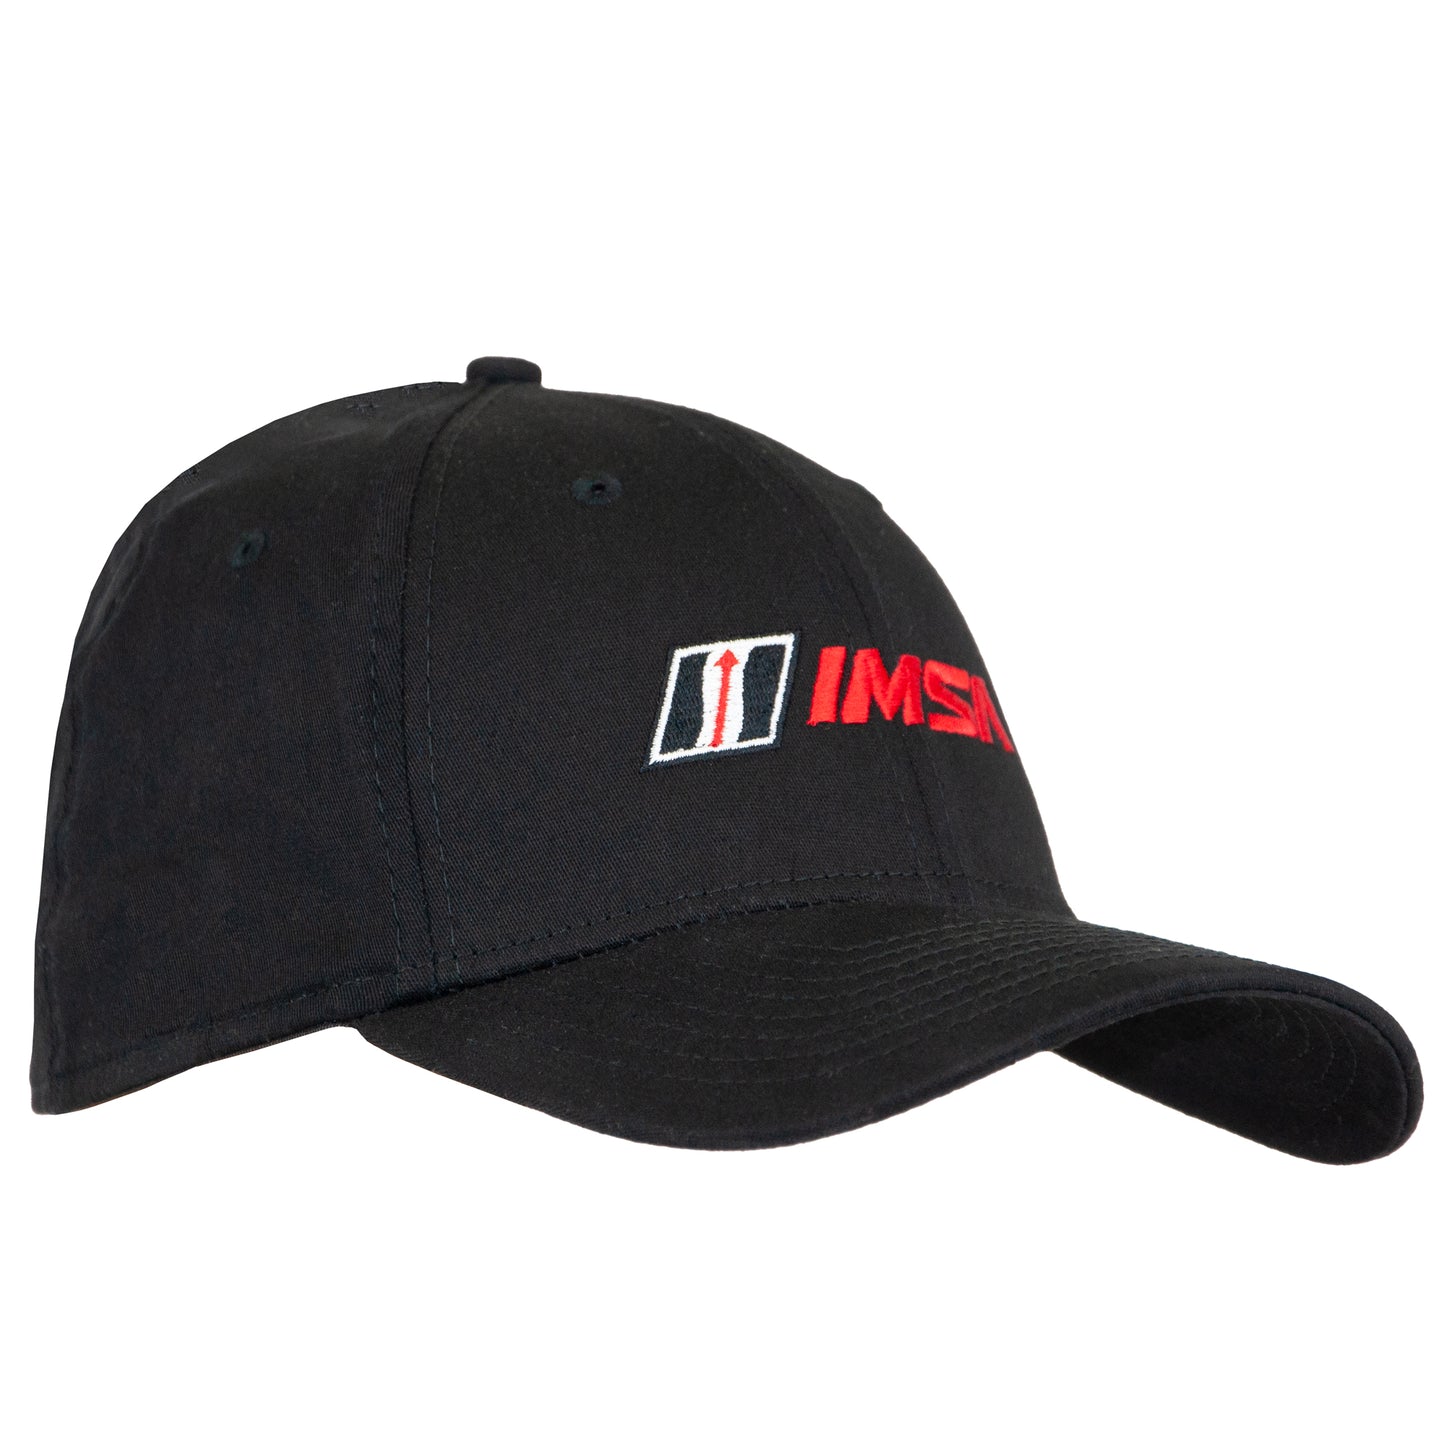 IMSA New Era Sized Hat-Black